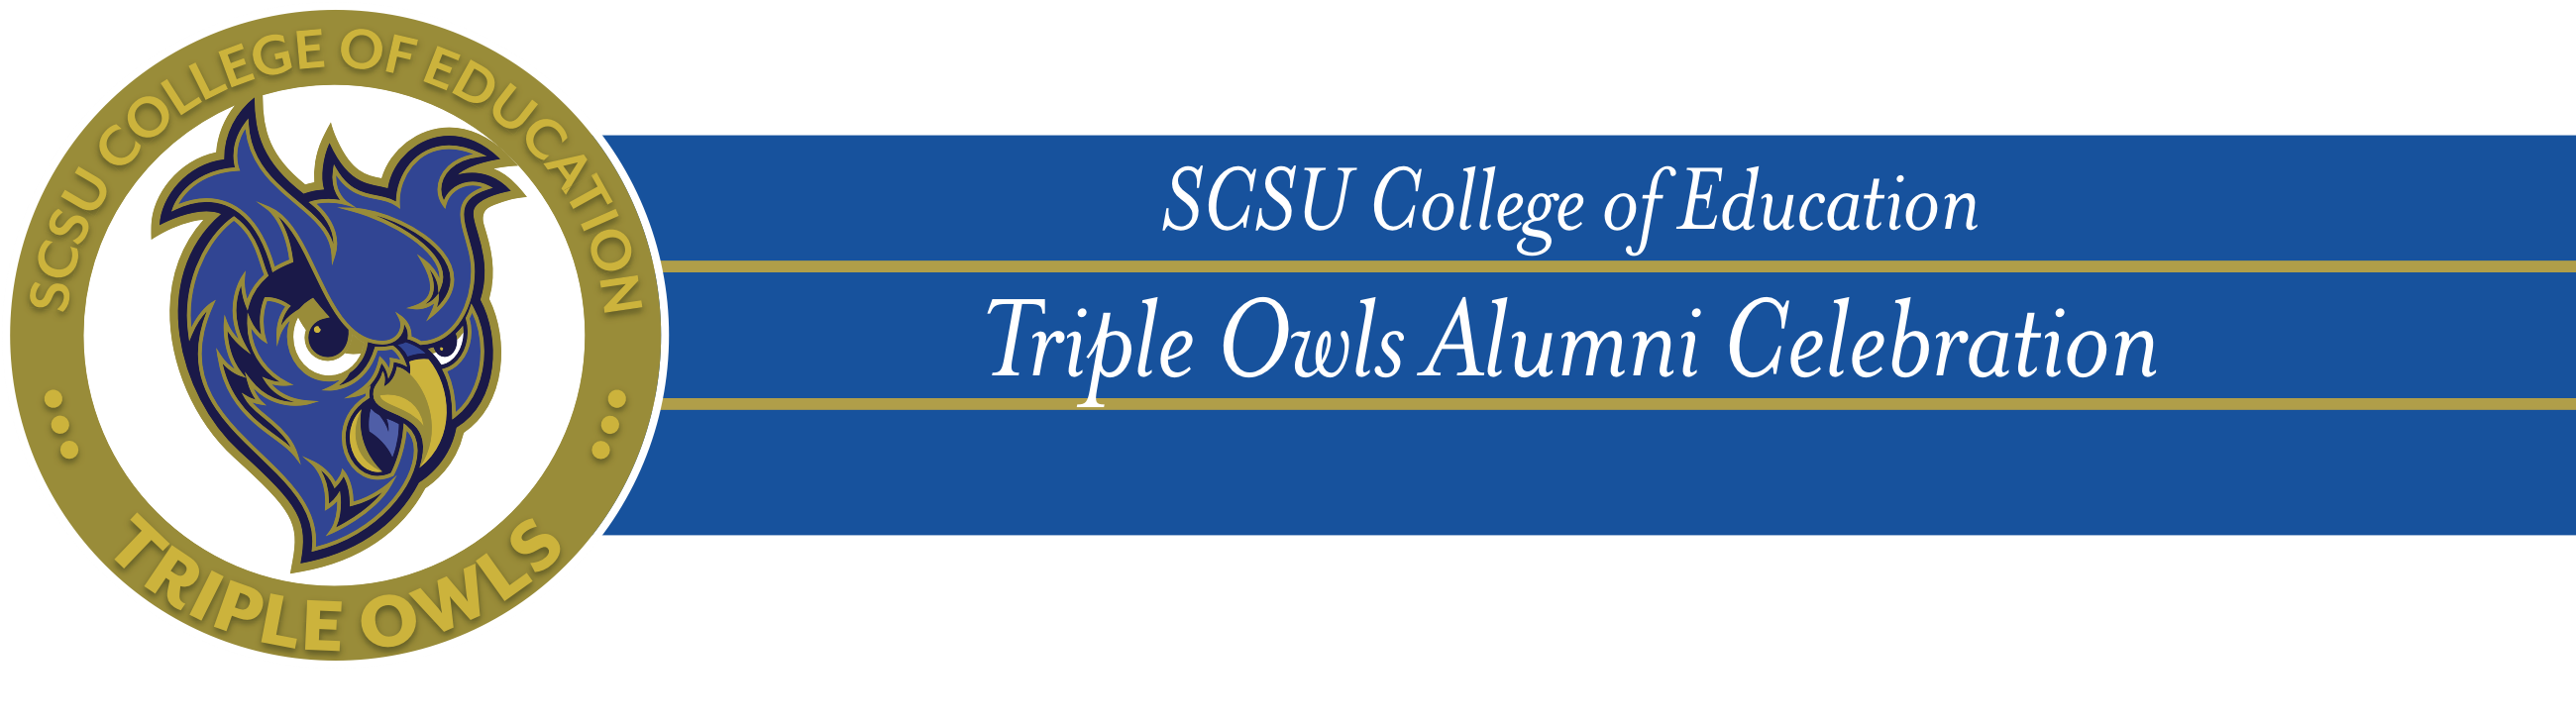 SCSU College of Education Triple Owls Alumni Celebration